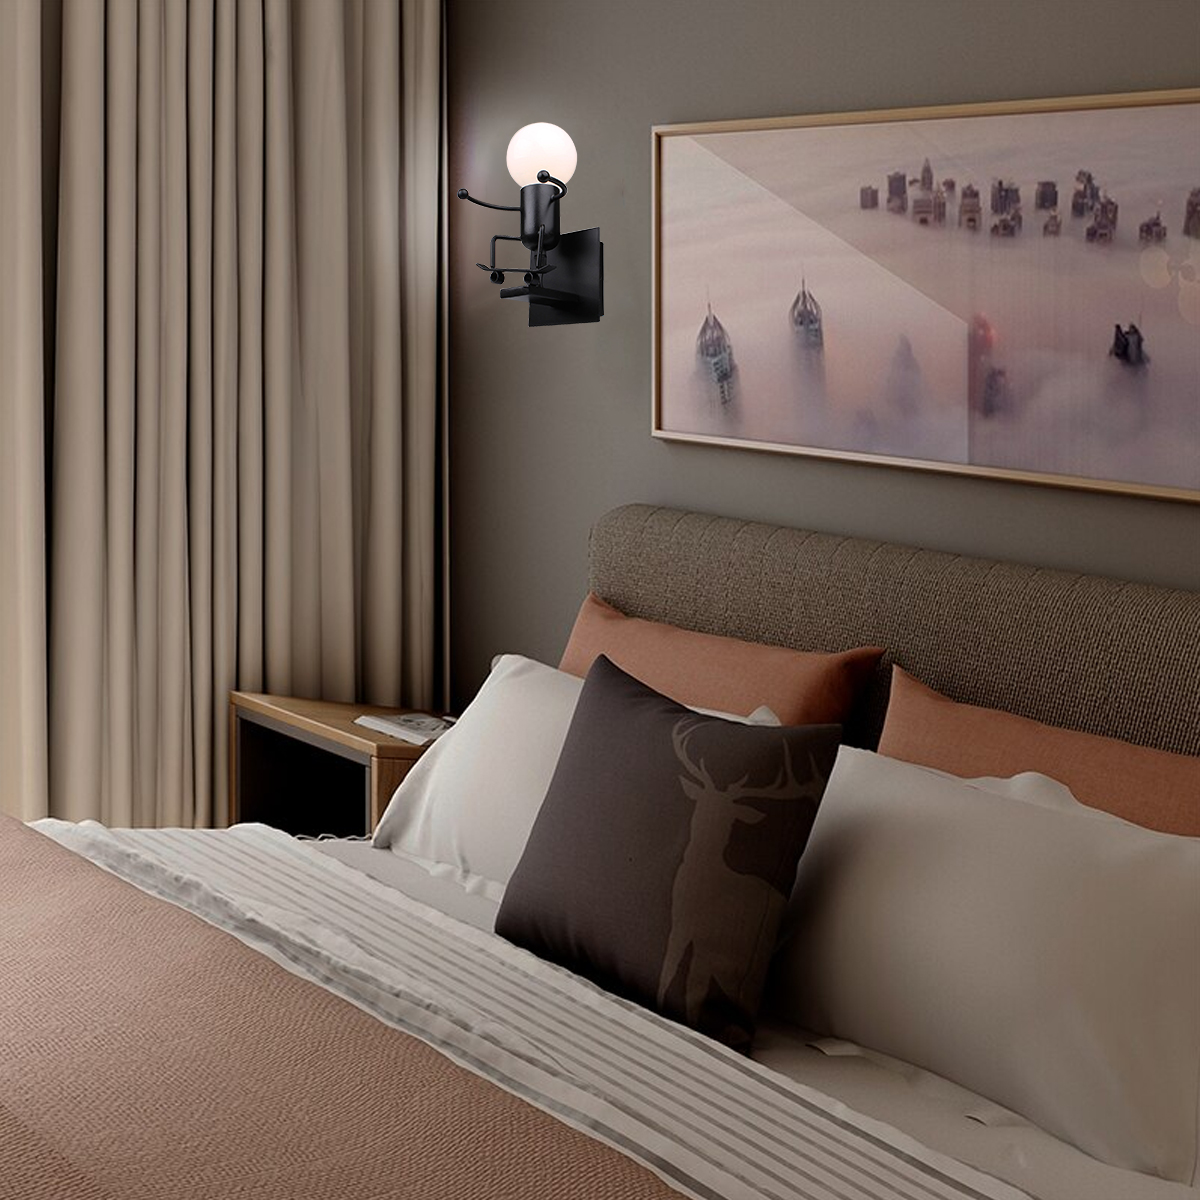 220V-E27-Wall-Iron-LED-Sconce-Light-Lamp-Creative-Design-Living-room-Bedroom-1795073-5